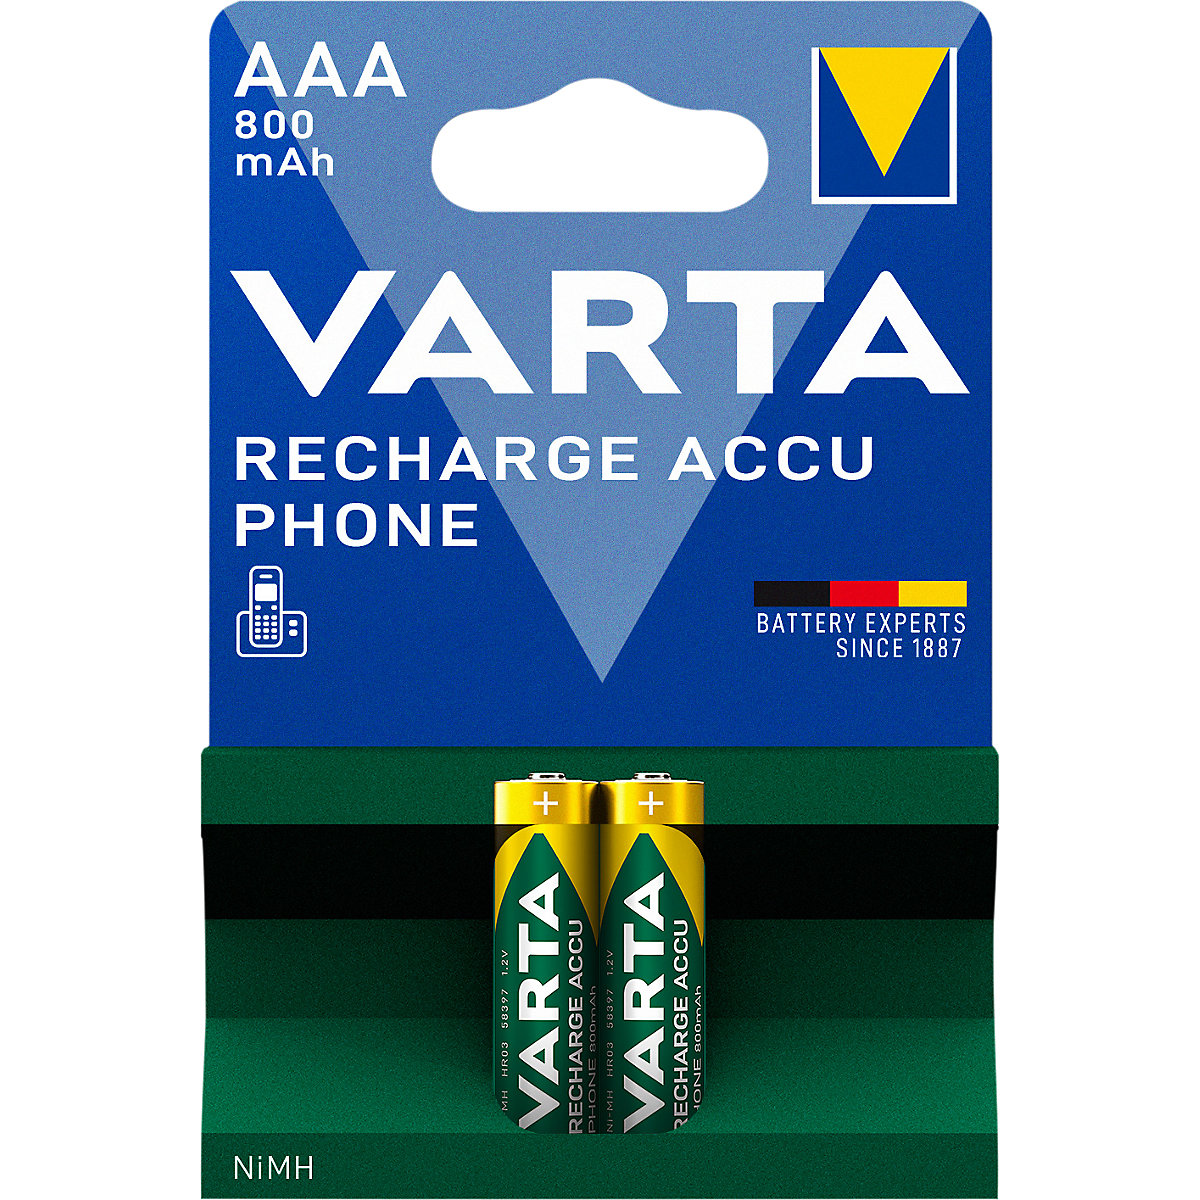 Batteria per telefoni cordless, ricaricabile - VARTA